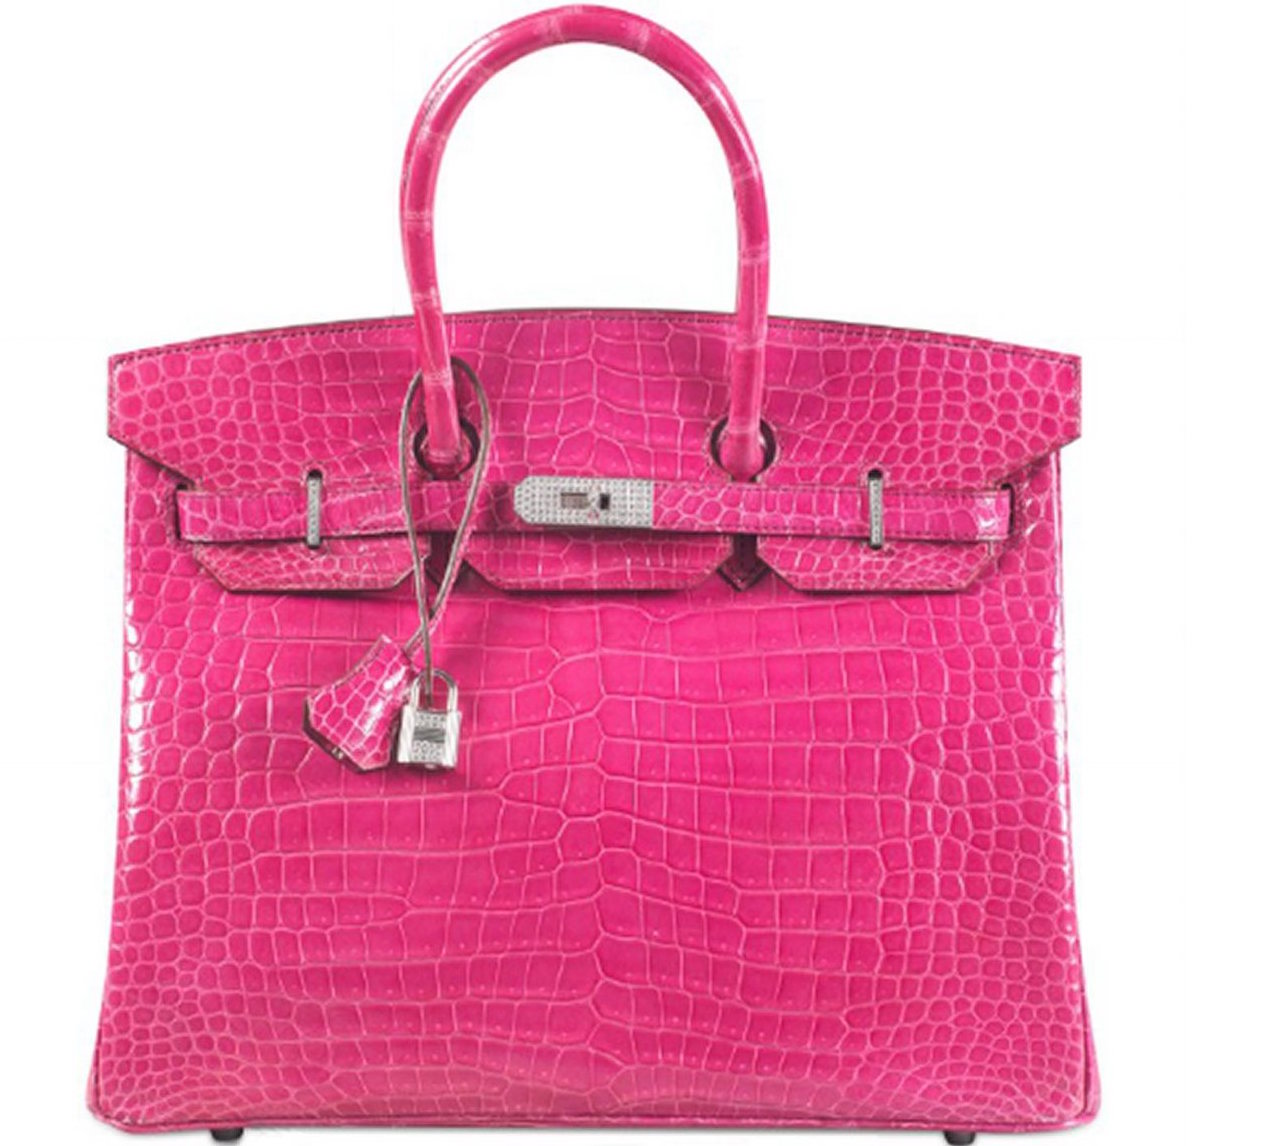 Birkin Aside, Here Are 10 Luxury Made-In-Africa Handbags To Splurge On